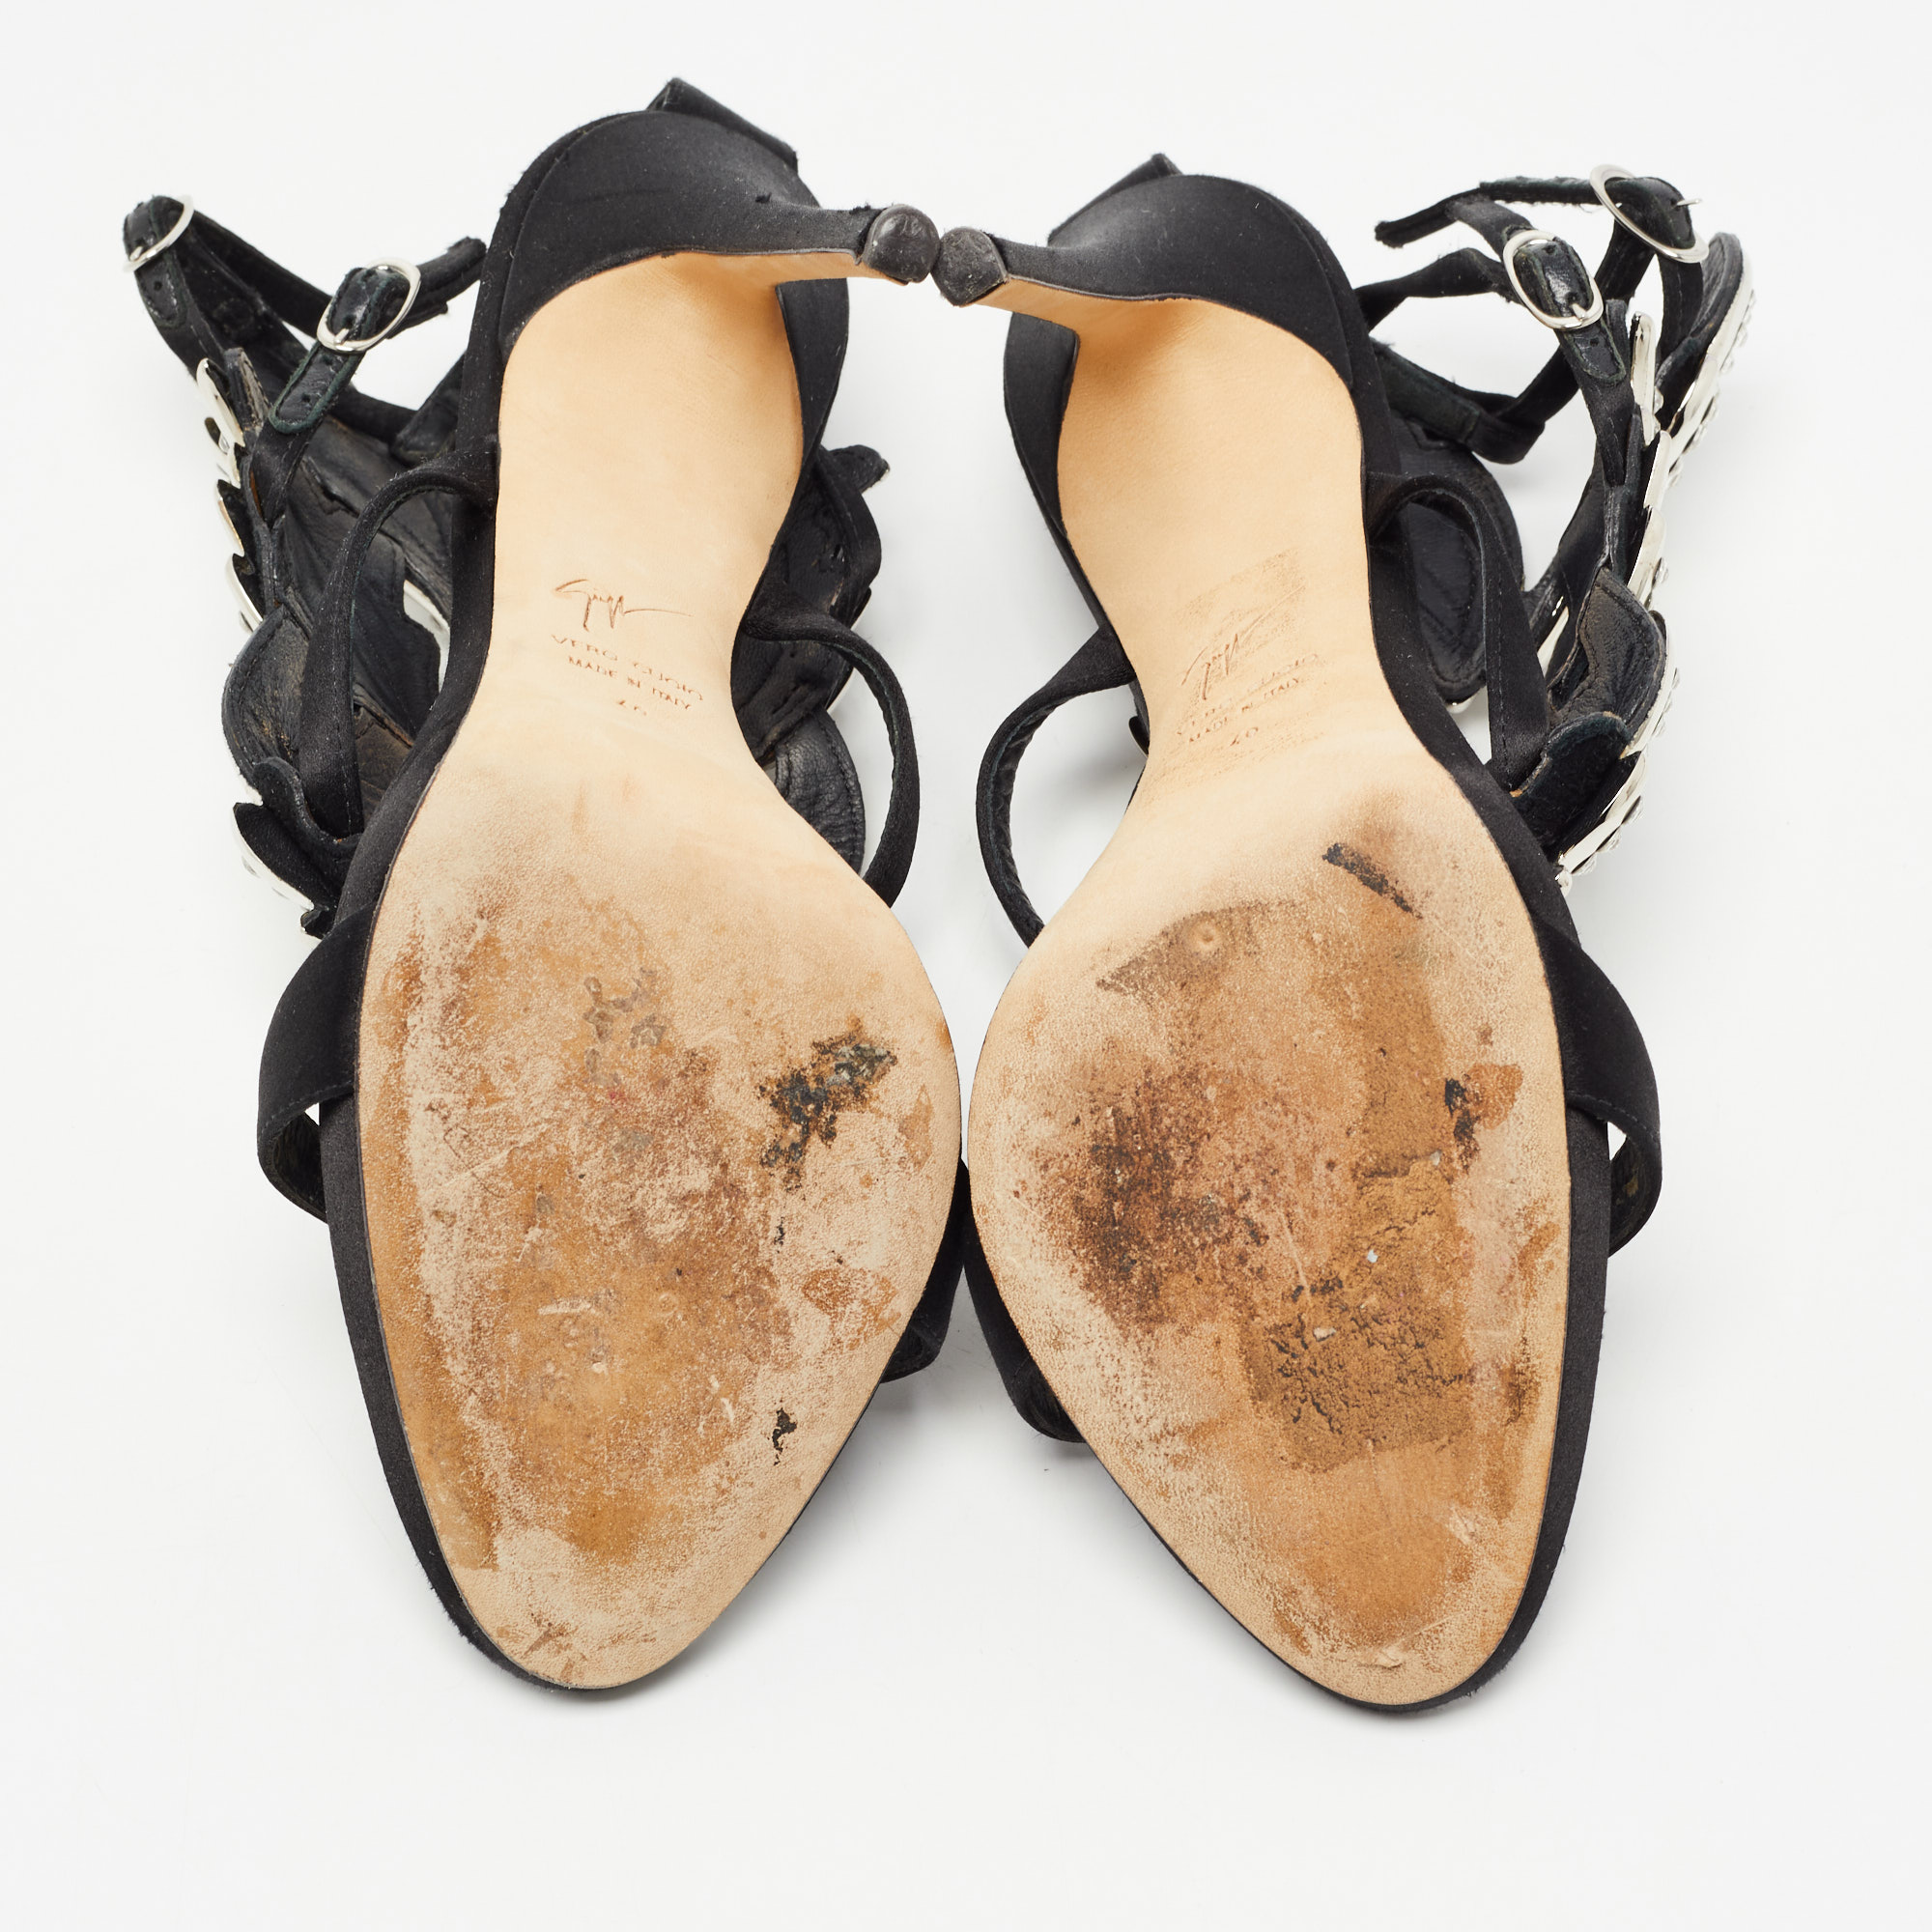 Giuseppe Zanotti Black Satin Wing Jeweled Sandals Size 40